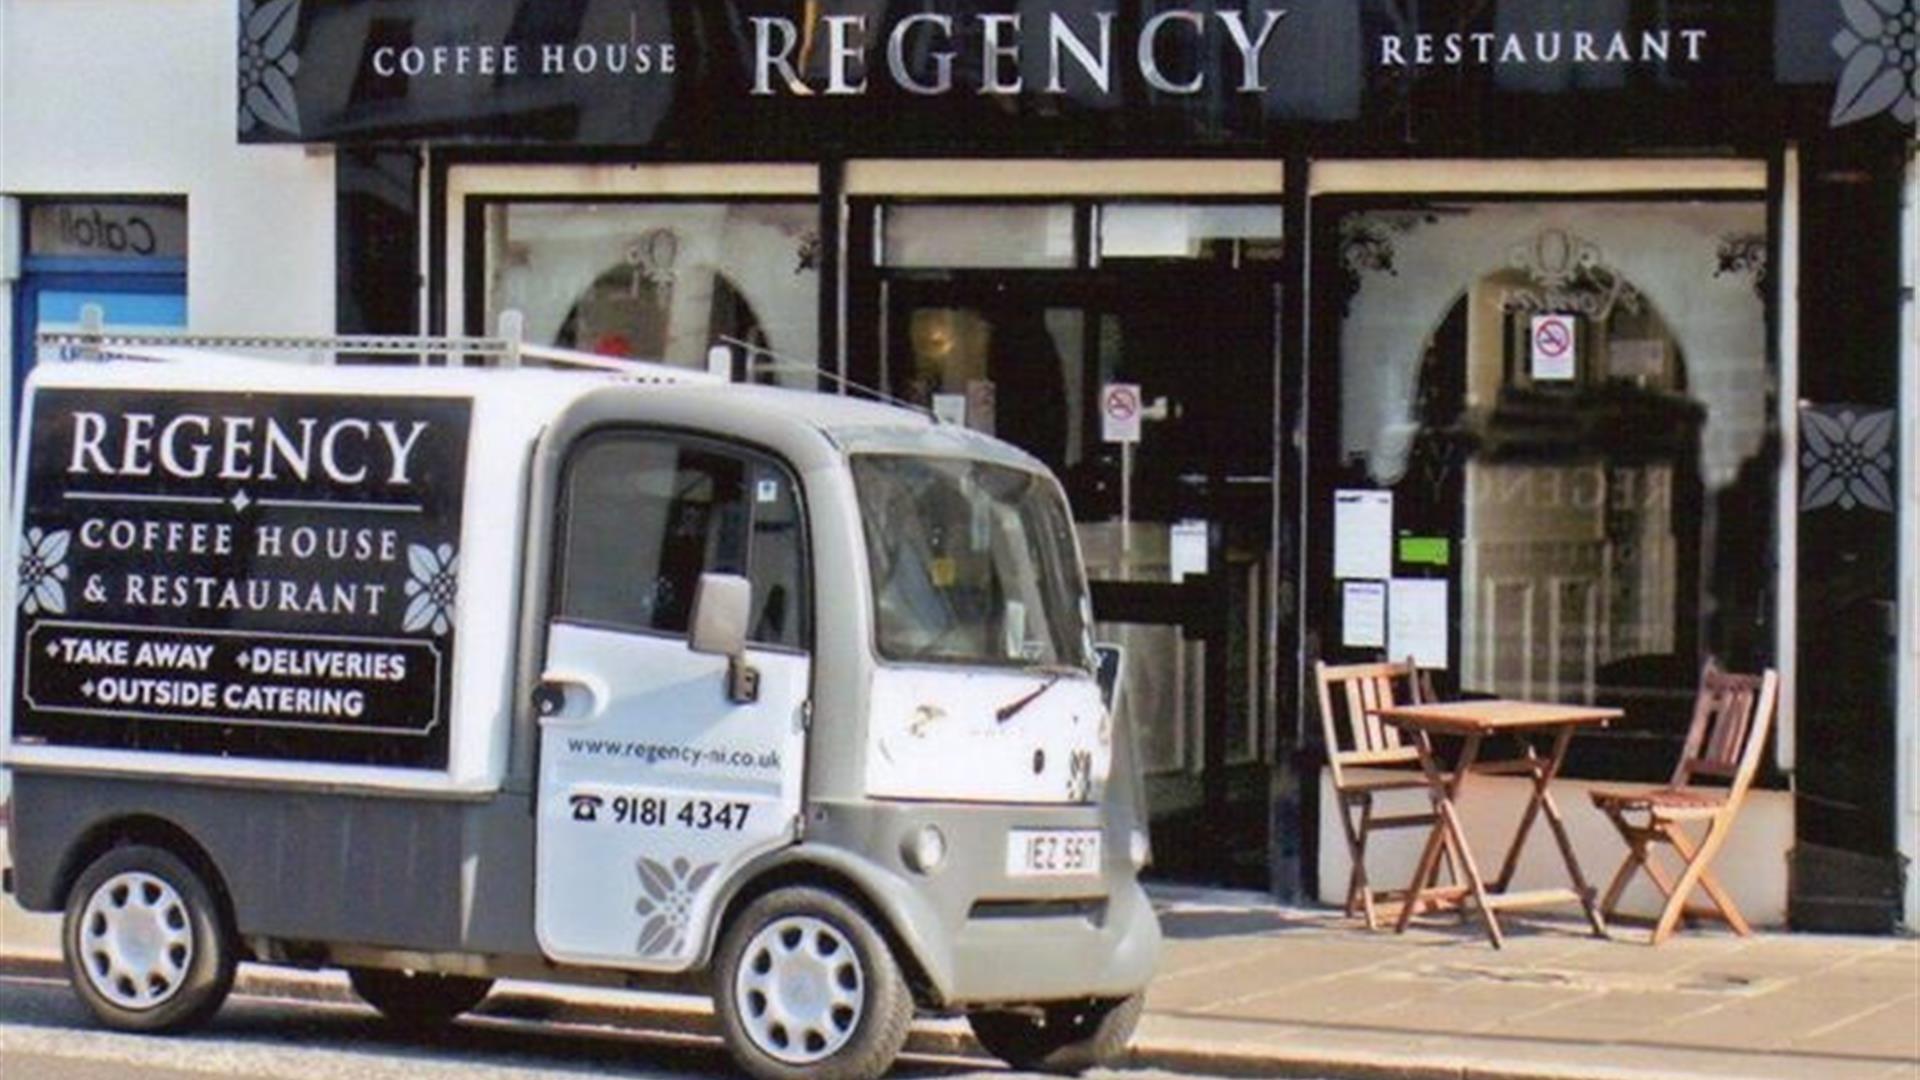 Regency Coffee House branded van sitting outside the coffee house/restaurant